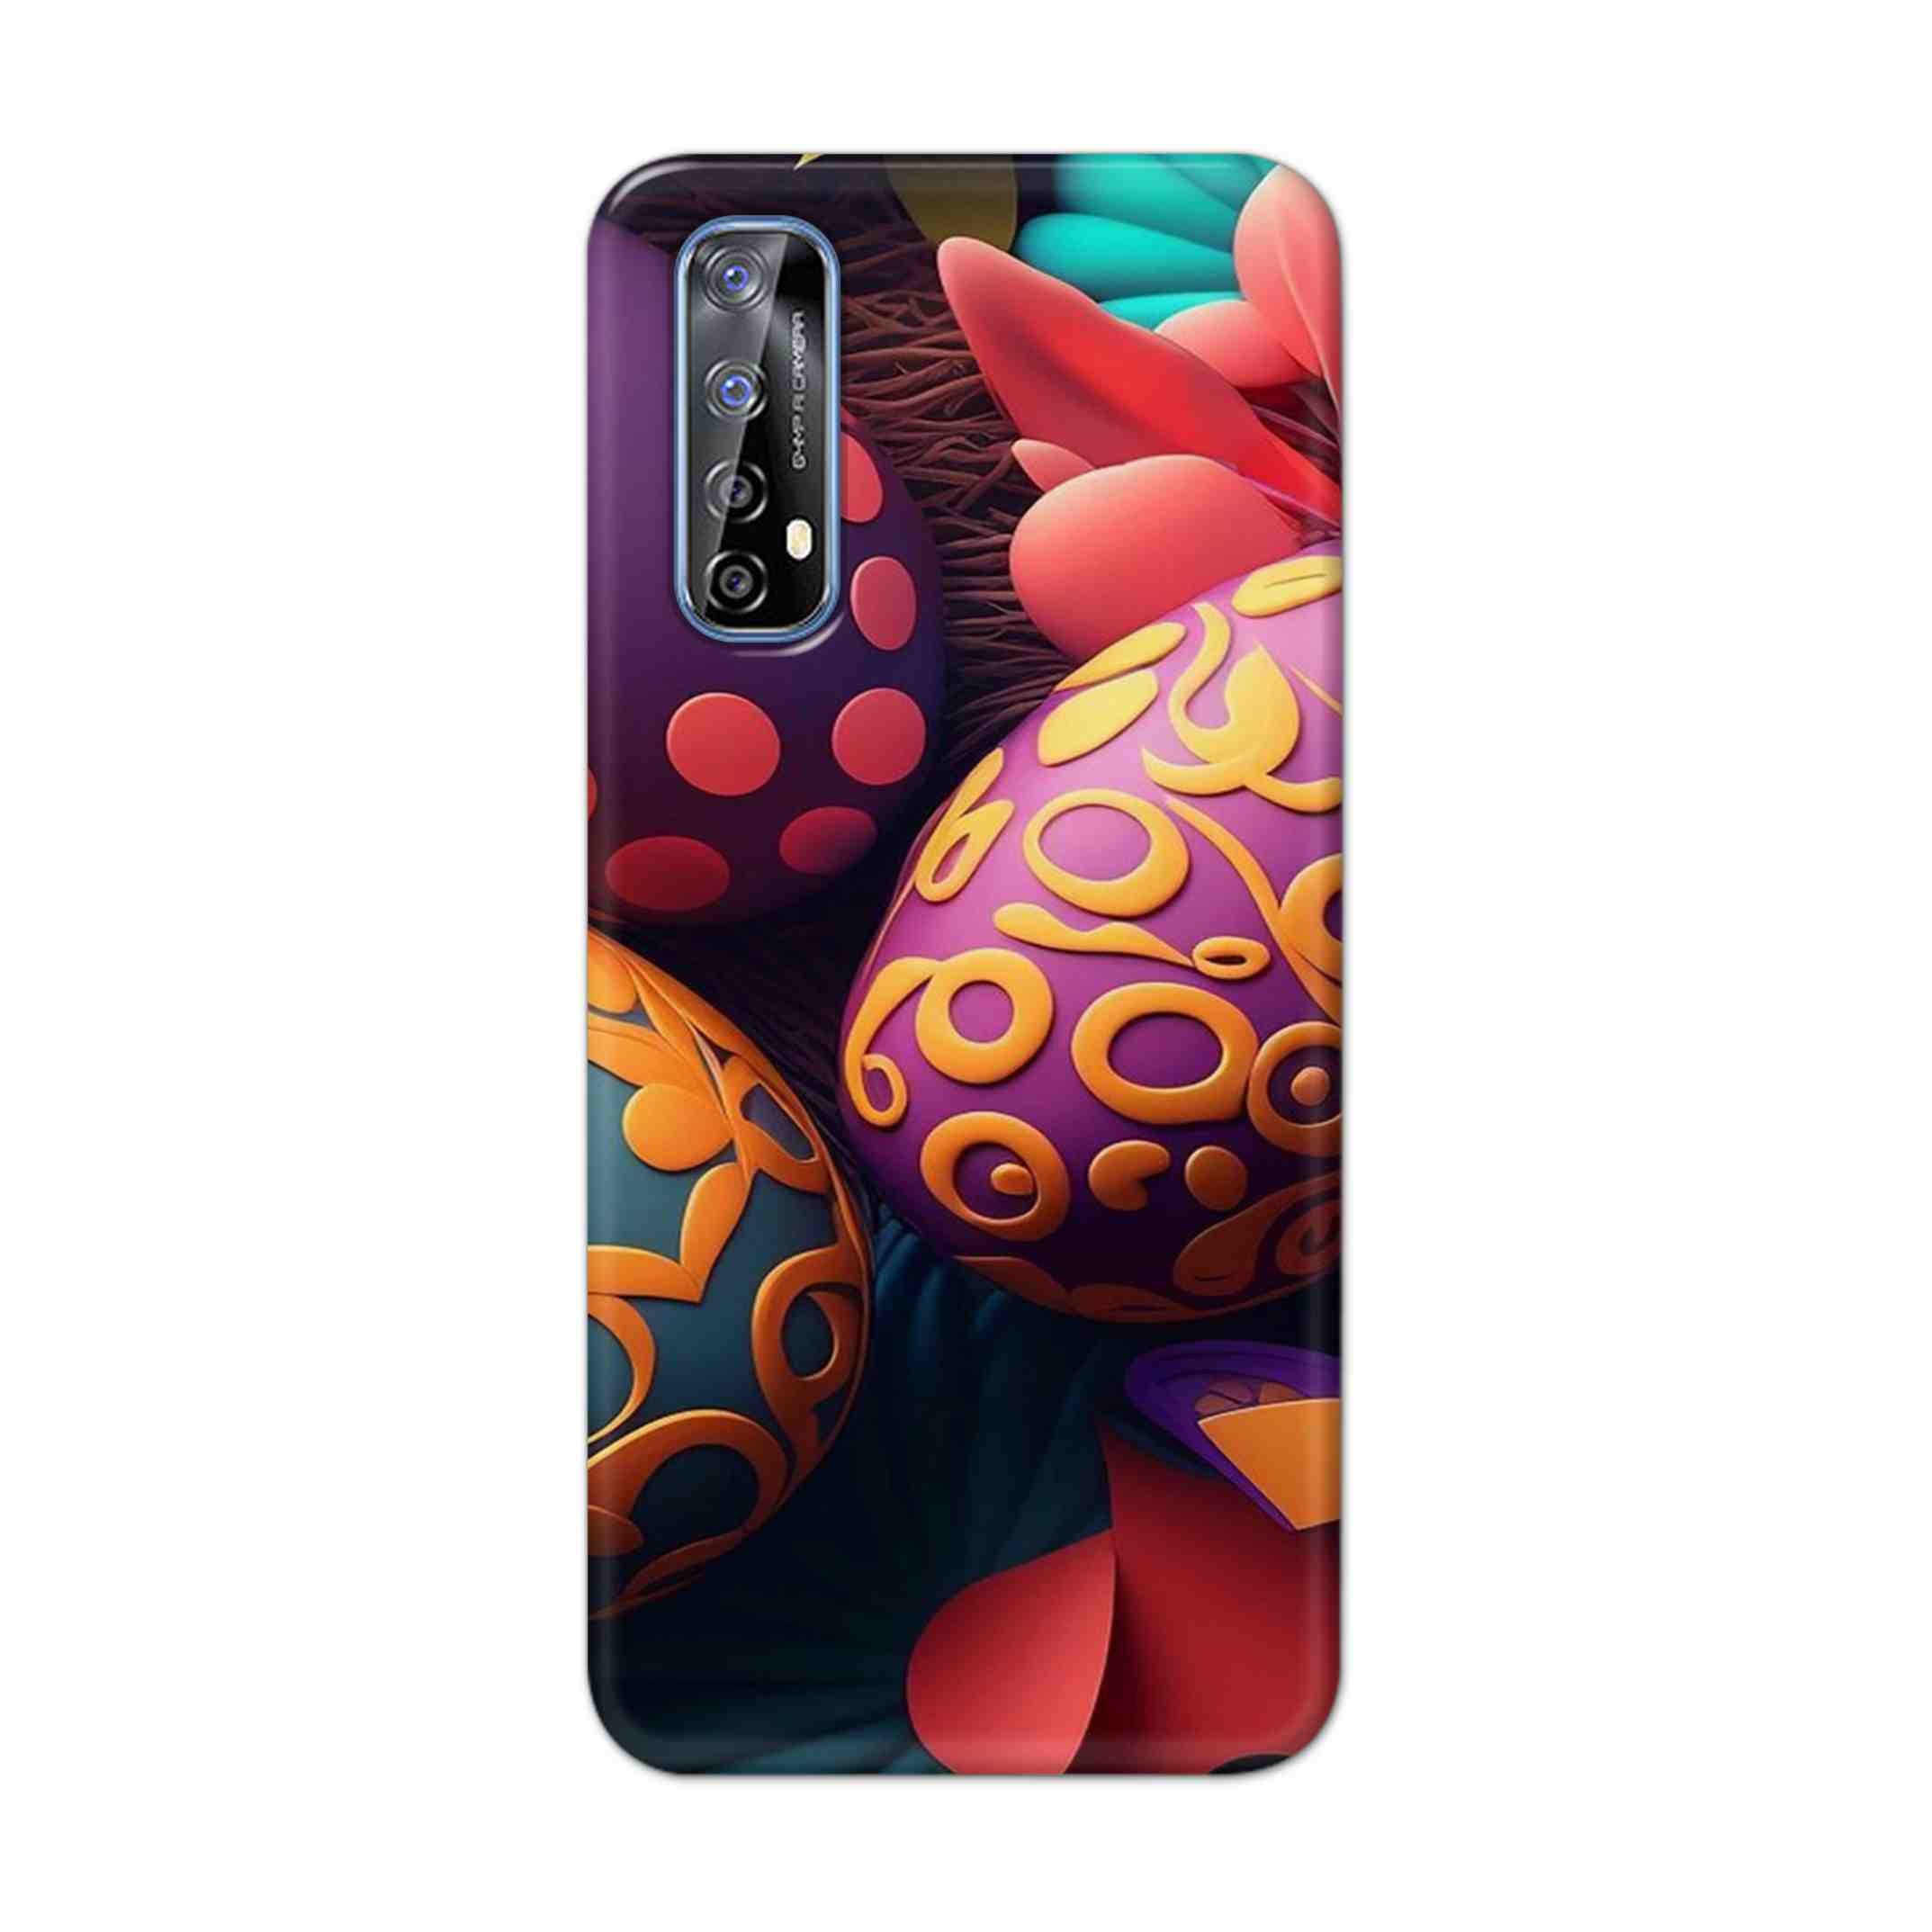 Buy Easter Egg Hard Back Mobile Phone Case Cover For Realme 7 Online